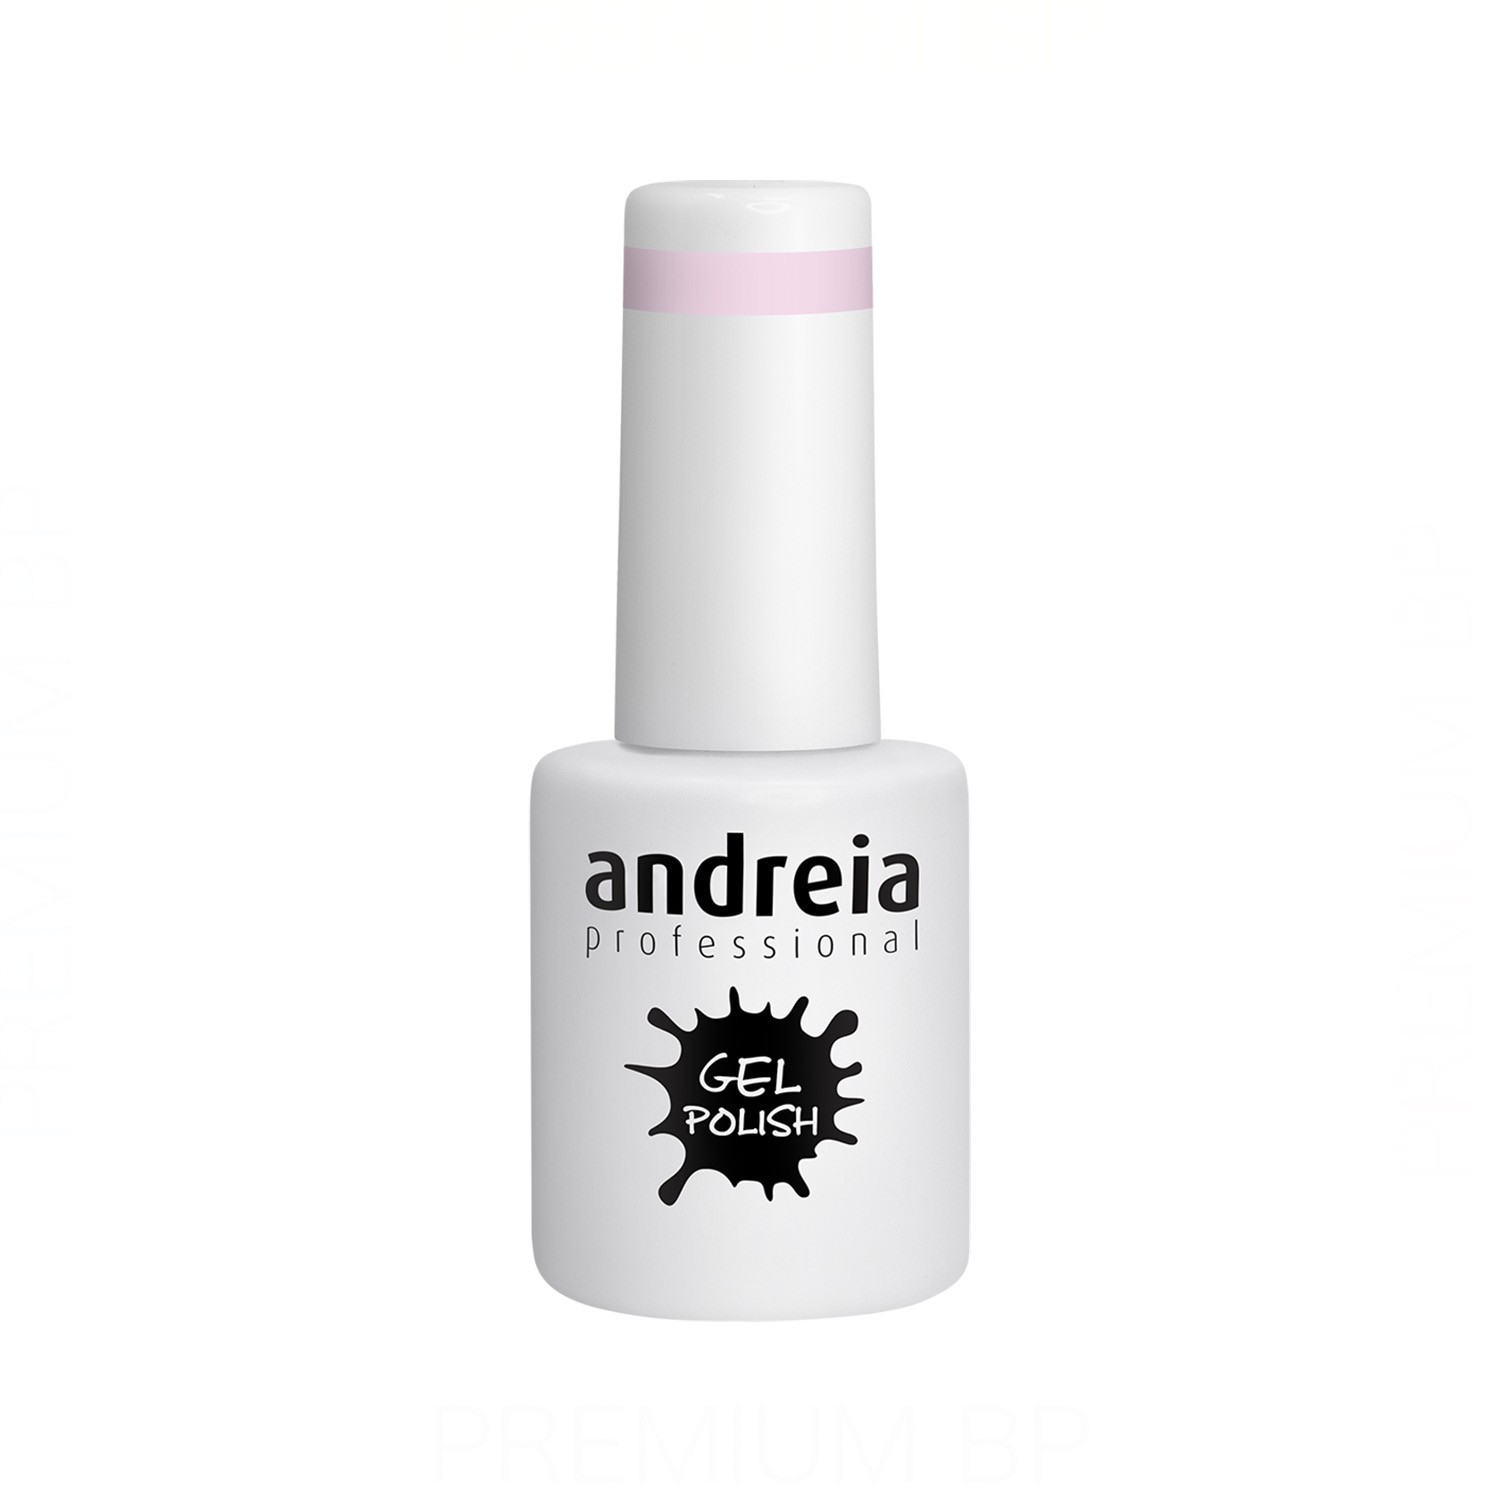 Andreia - Andreia professional gel polish esmalte semipermanente 10,5 ml color 217, esmalte semipermanente con duración de 4 semanas color rosa translúcido